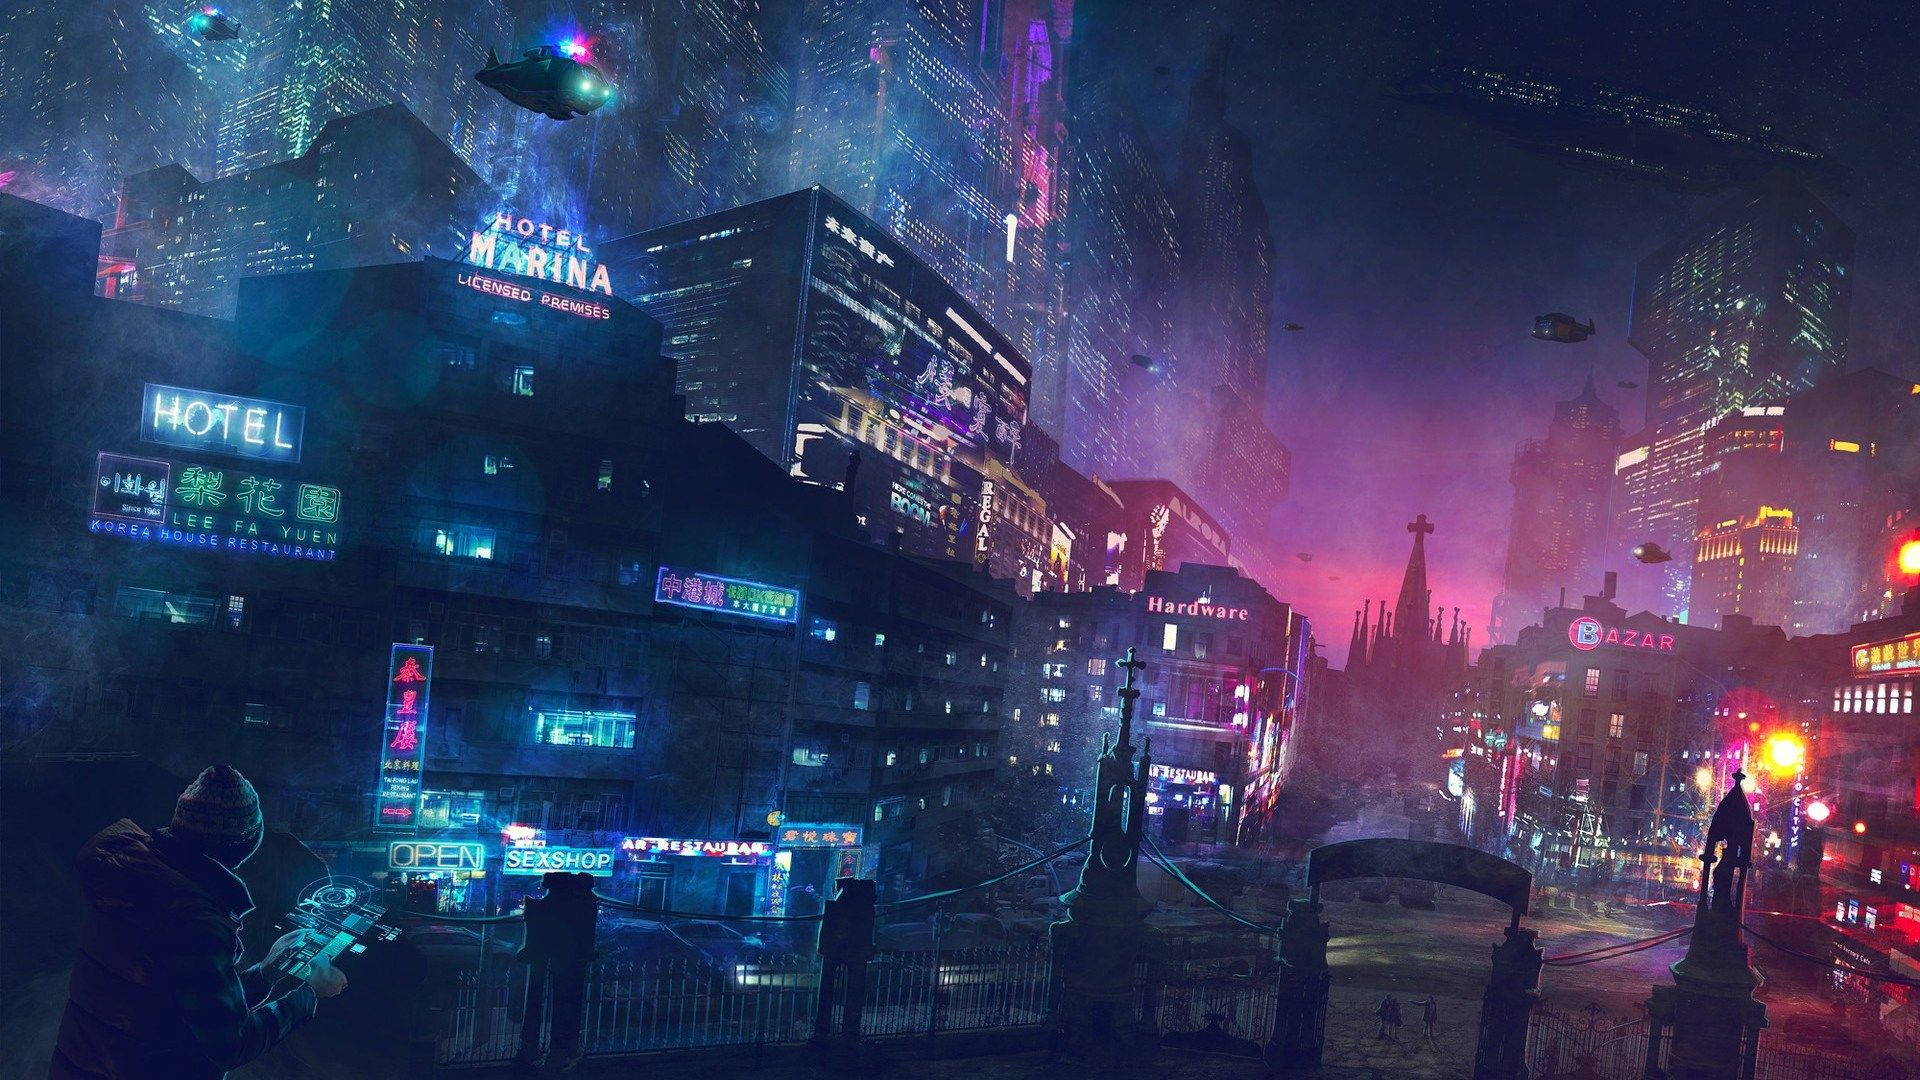 100 Free Cyberpunk City HD Wallpapers & Backgrounds 